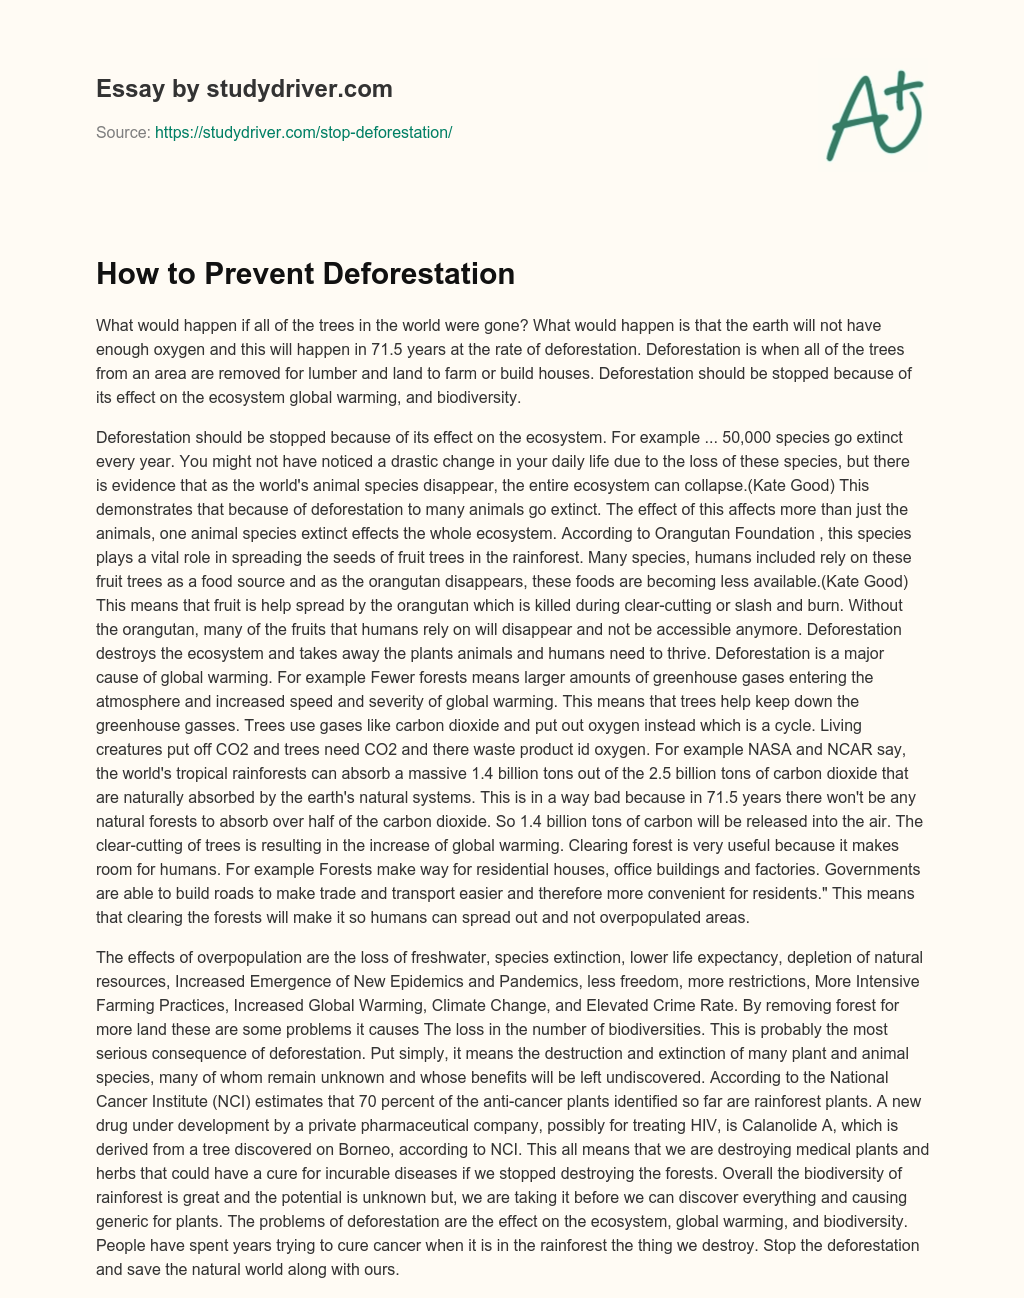 How to Prevent Deforestation essay